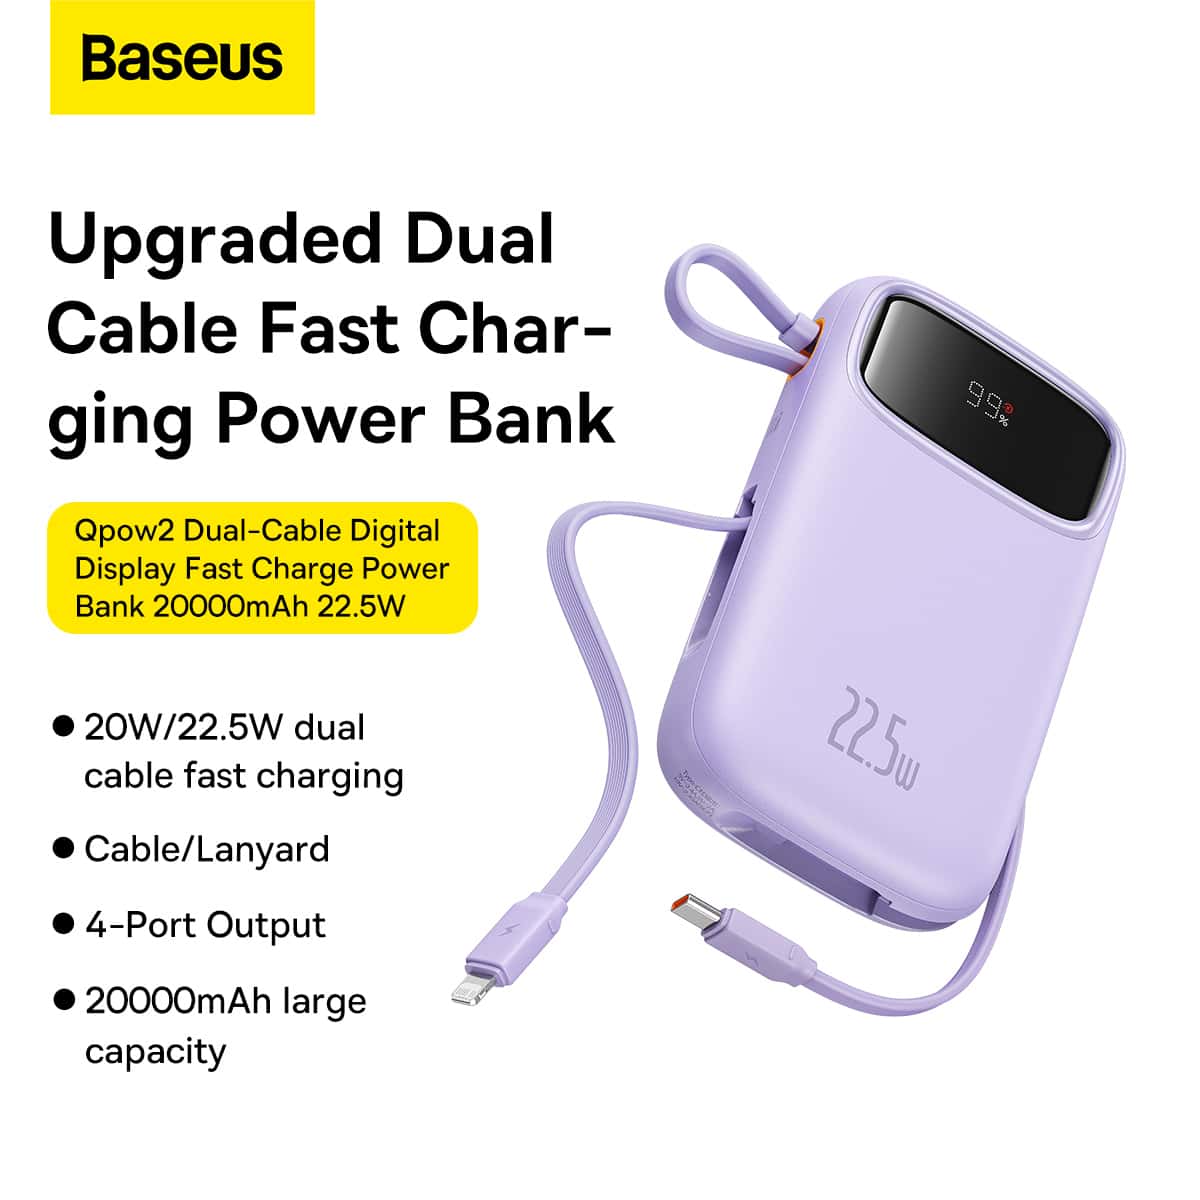 Baseus Qpow2 22.5W 10000mAh Dual Cable Digital Display Fast Charge Power Bank 5